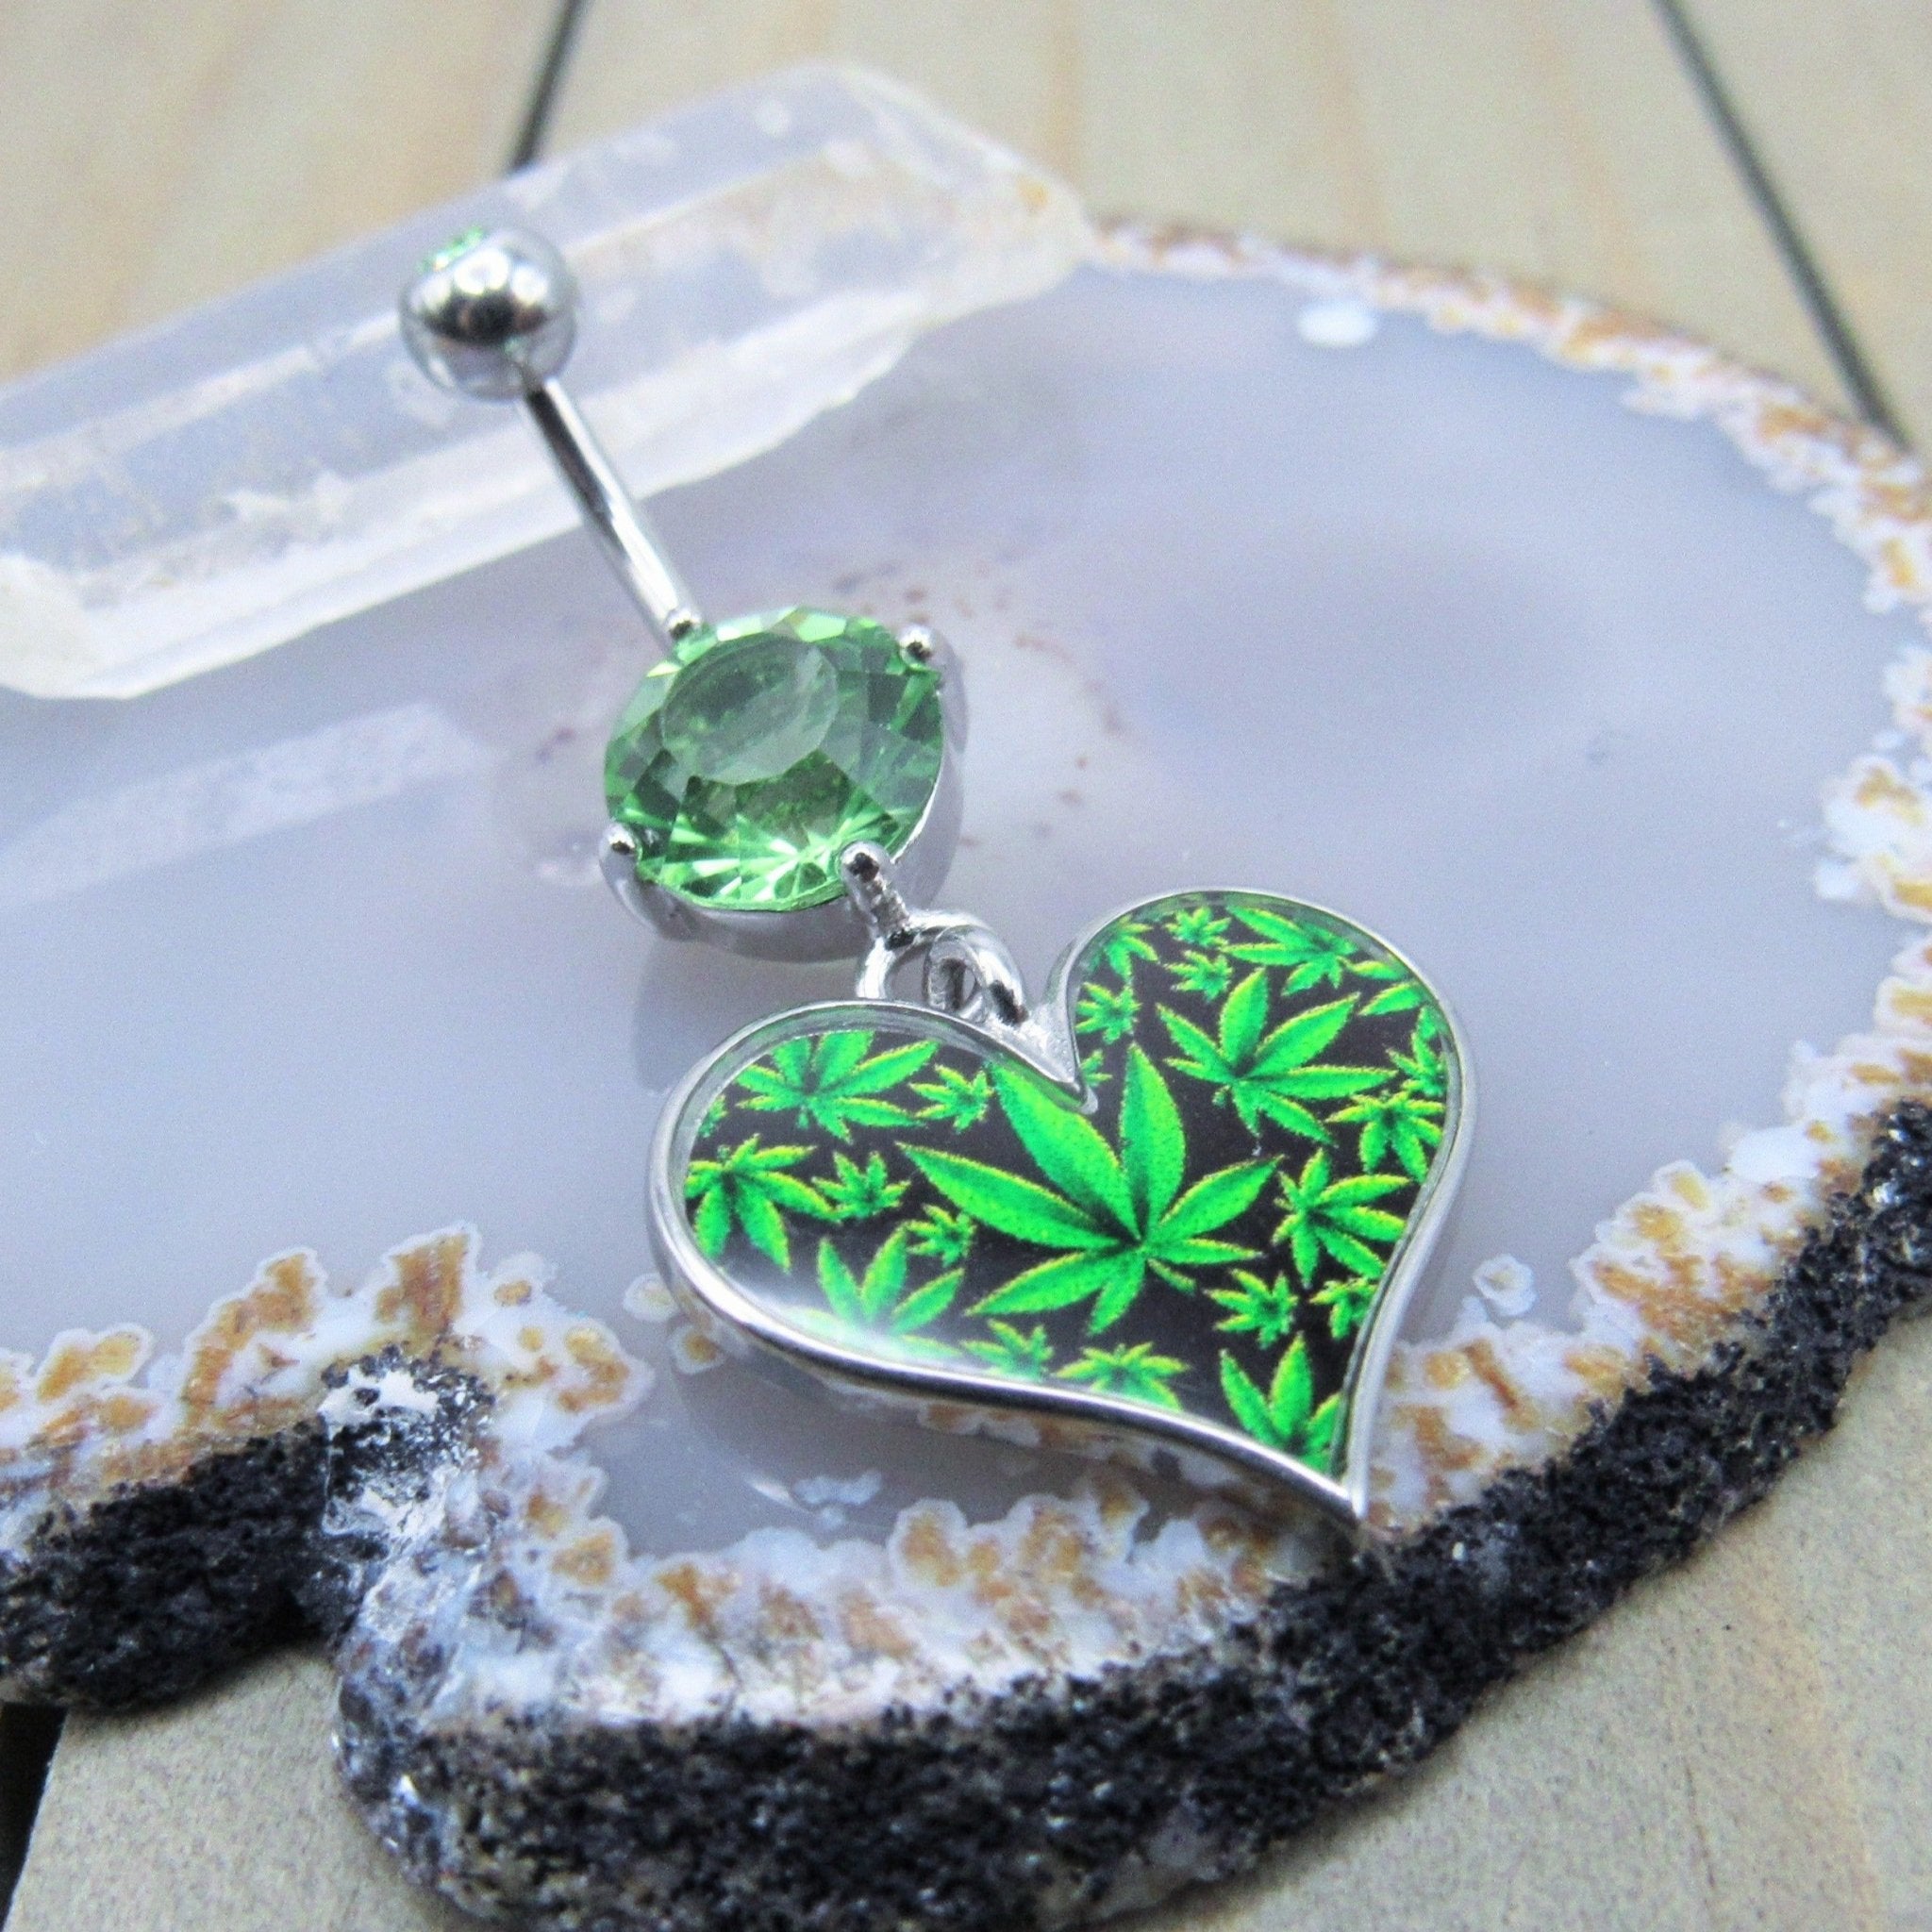 Green gemstone weed emblem heart design belly button piercing ring 14g